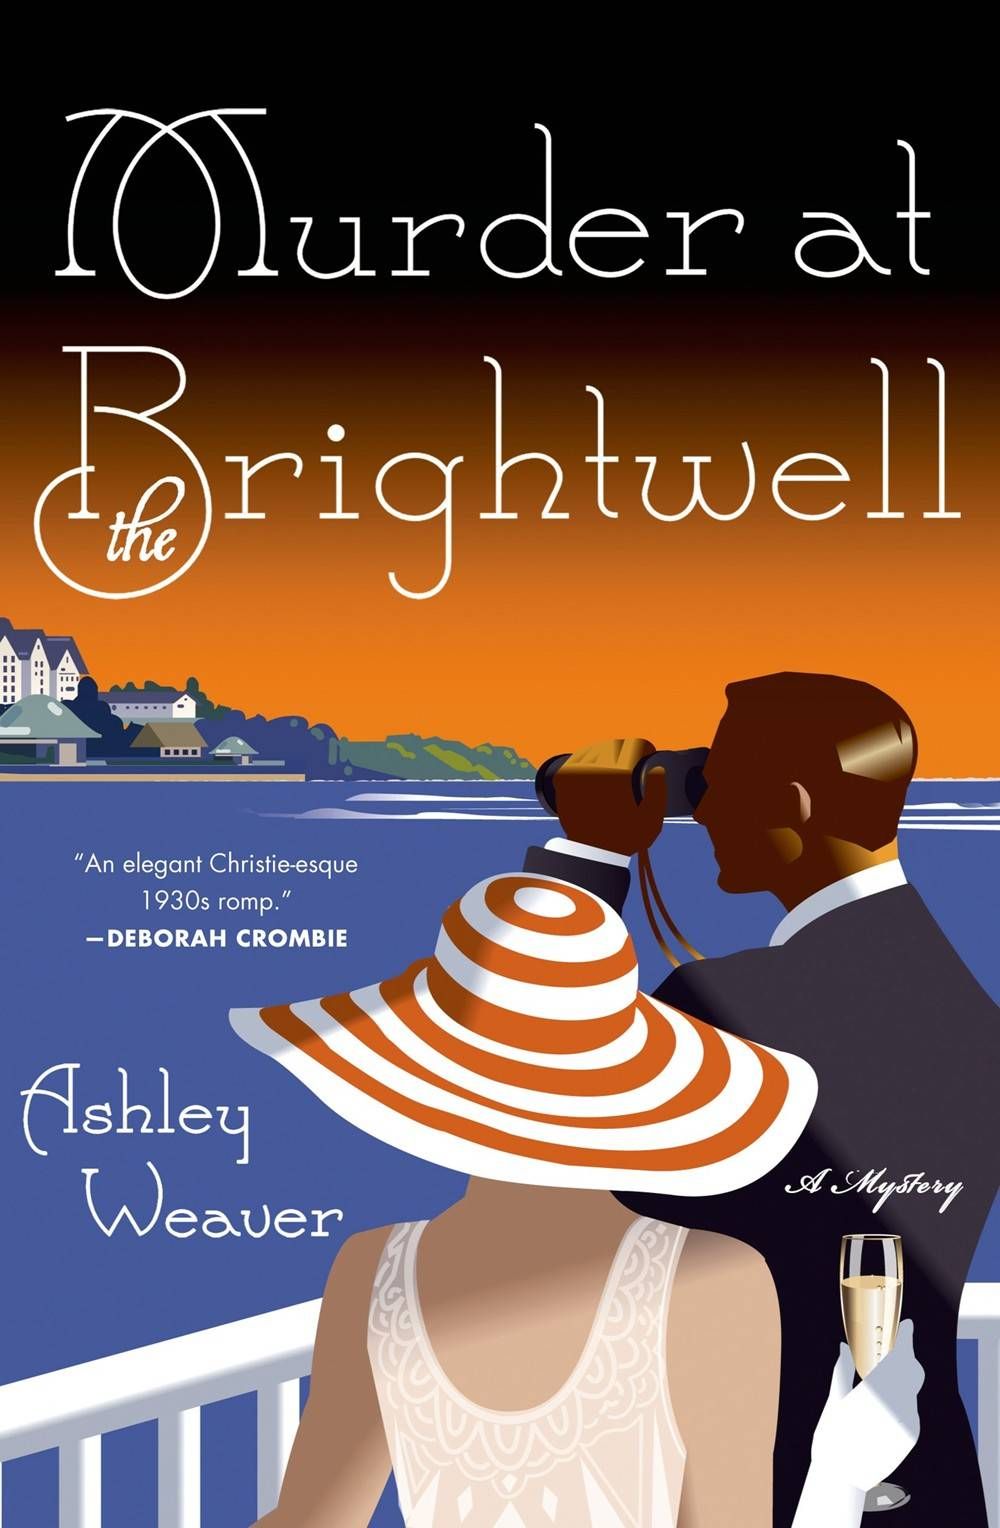 murder at the brightwell - ashley weaver